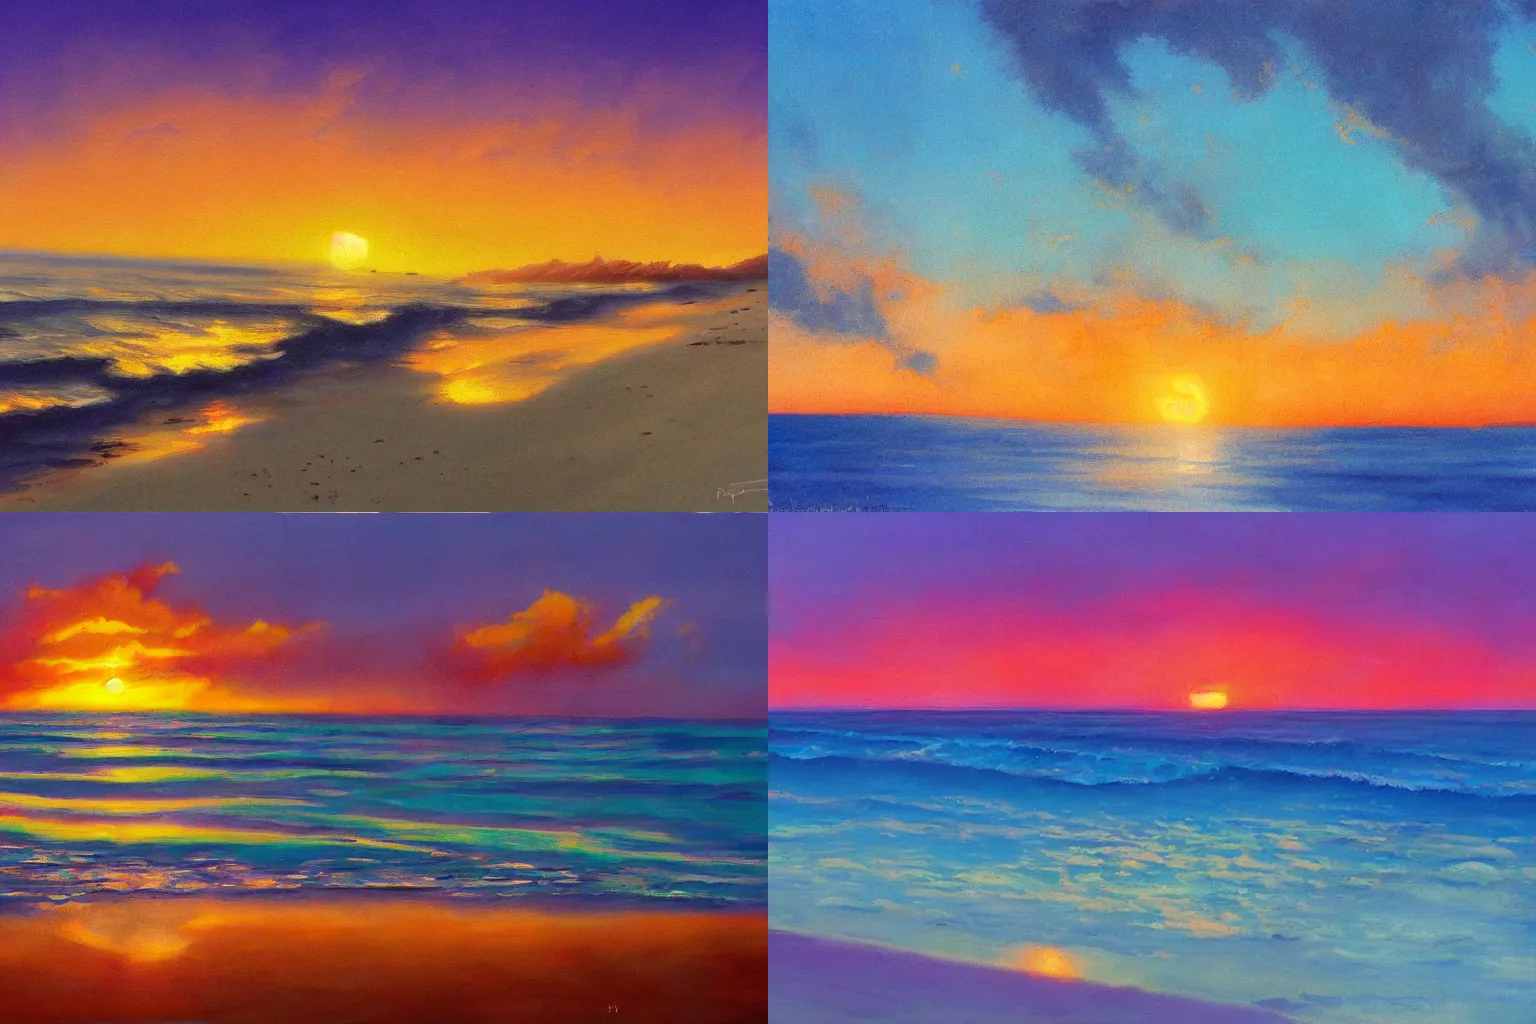 Prompt: epic dreamy beach sunset landscape by Ralph Bakshi